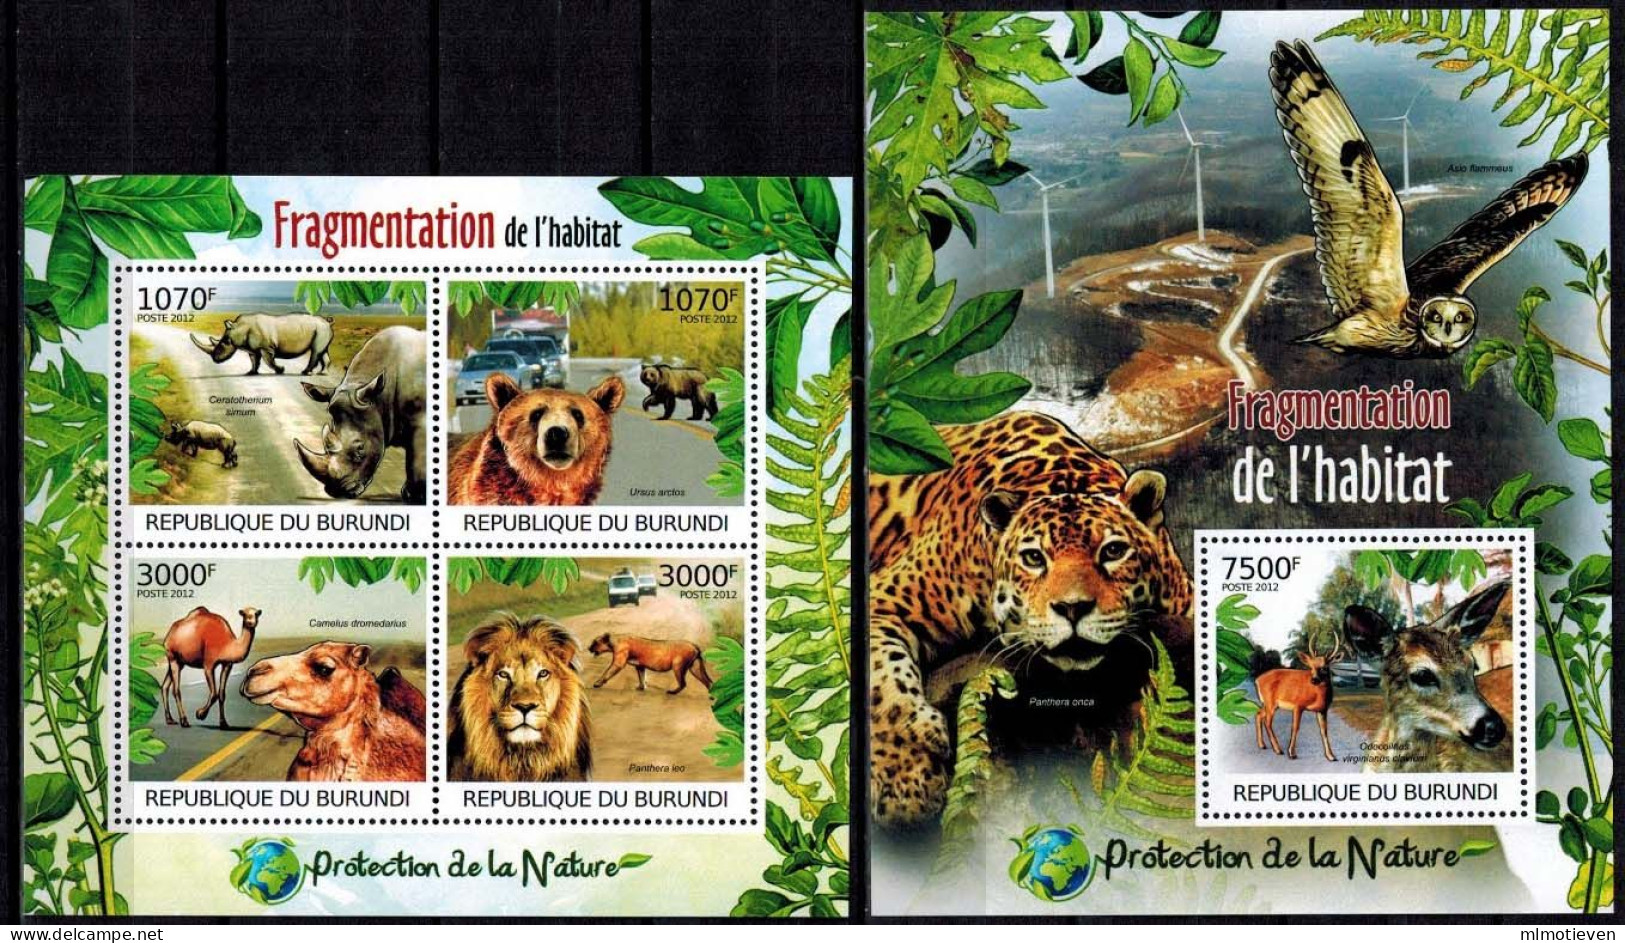 MDA-BK21-561 MINT ¤ BURUNDI 2012 KOMPL. SET ¤ FRAGMENTATION DE L'HABITAT  ENDANGERED SPECIES - ANIMALS OF THE WORLD - Wild